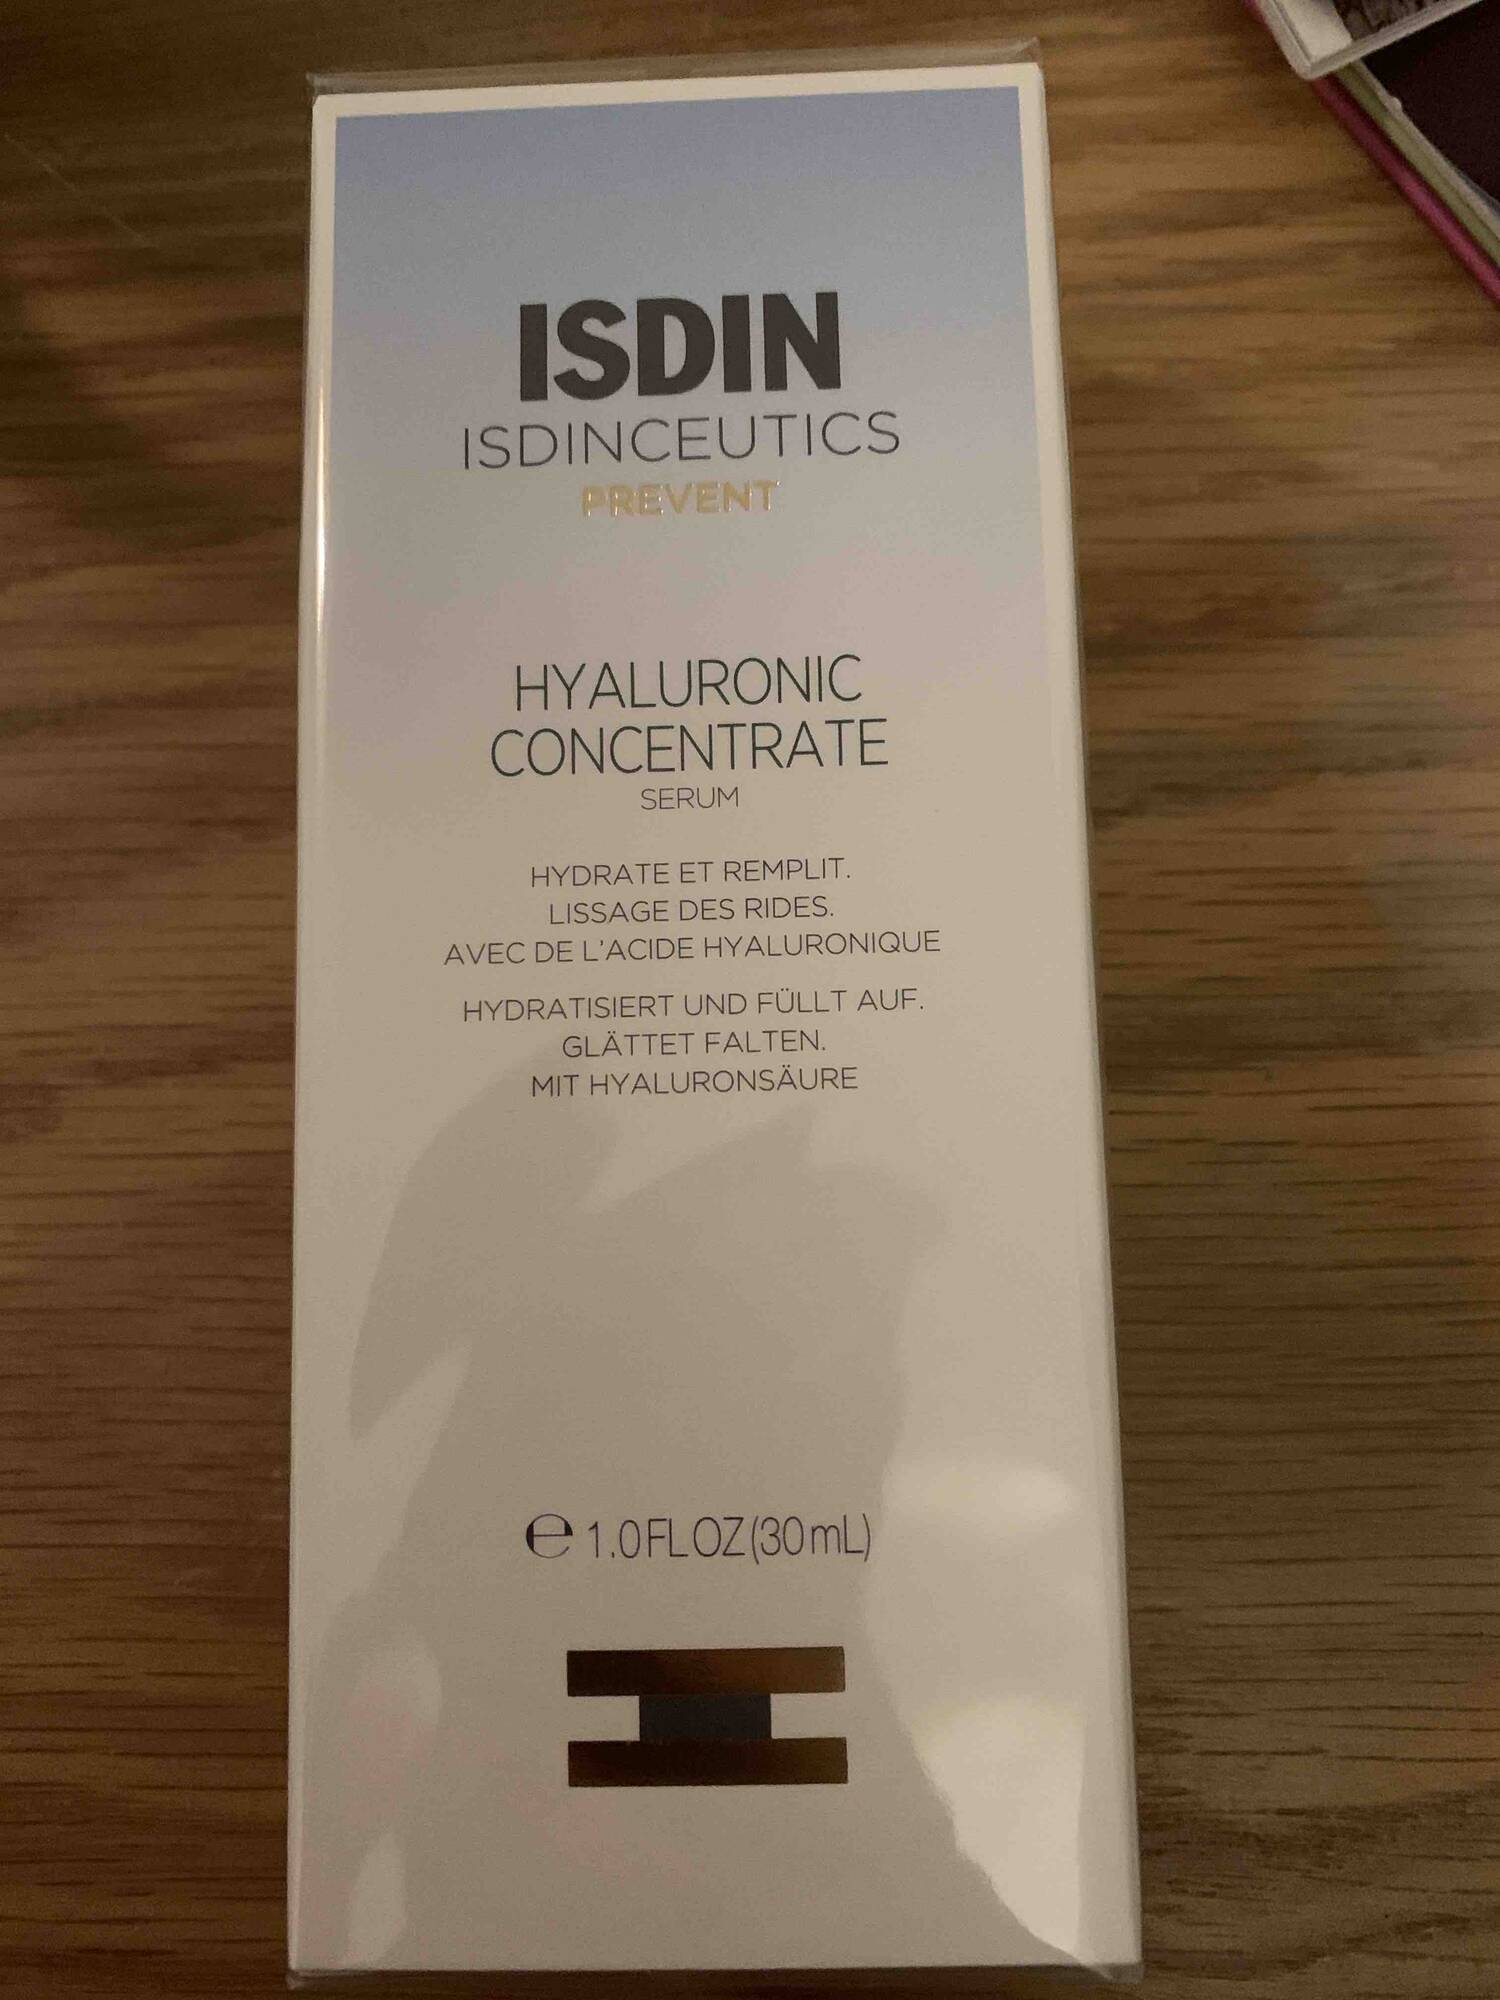 ISDIN - Isdinceutics prevent - Hyaluronic concentrate serum